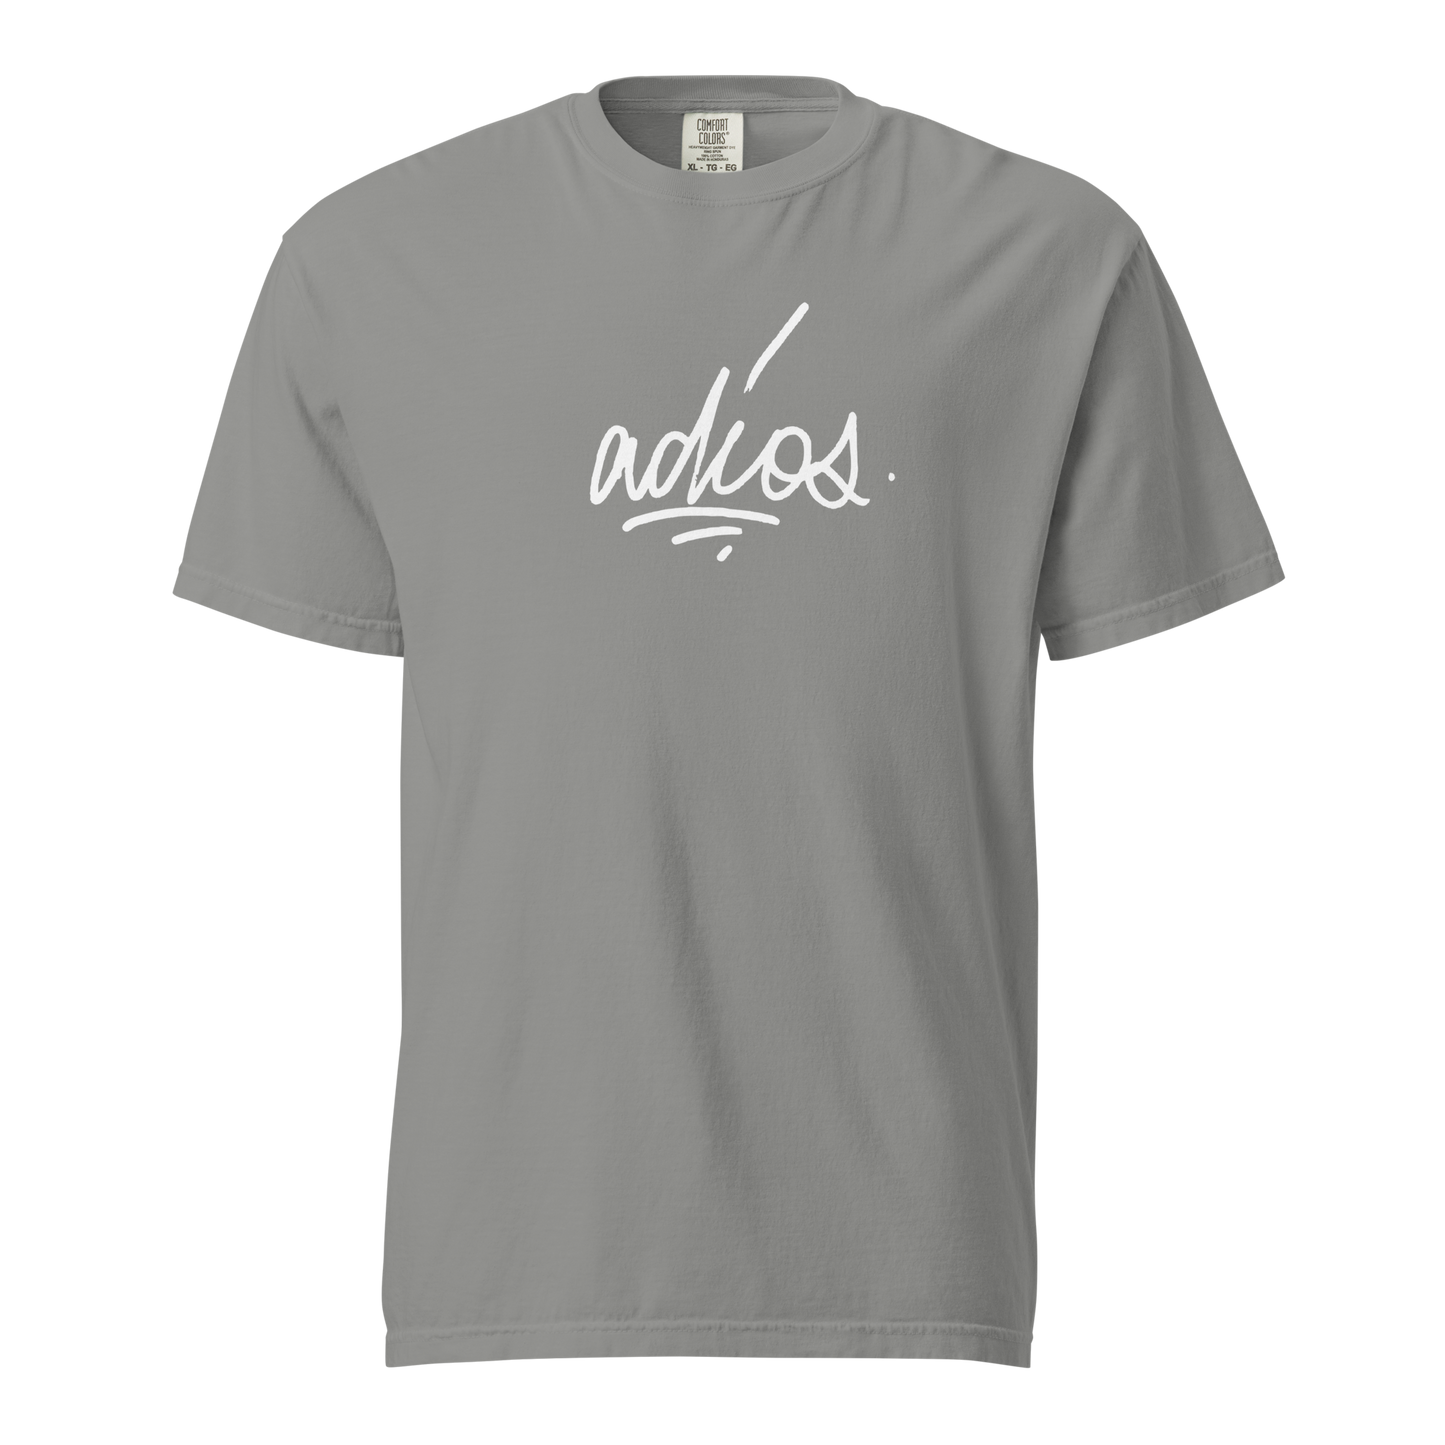 adios Unisex garment-dyed heavyweight Comfort Colors 1717 t-shirt